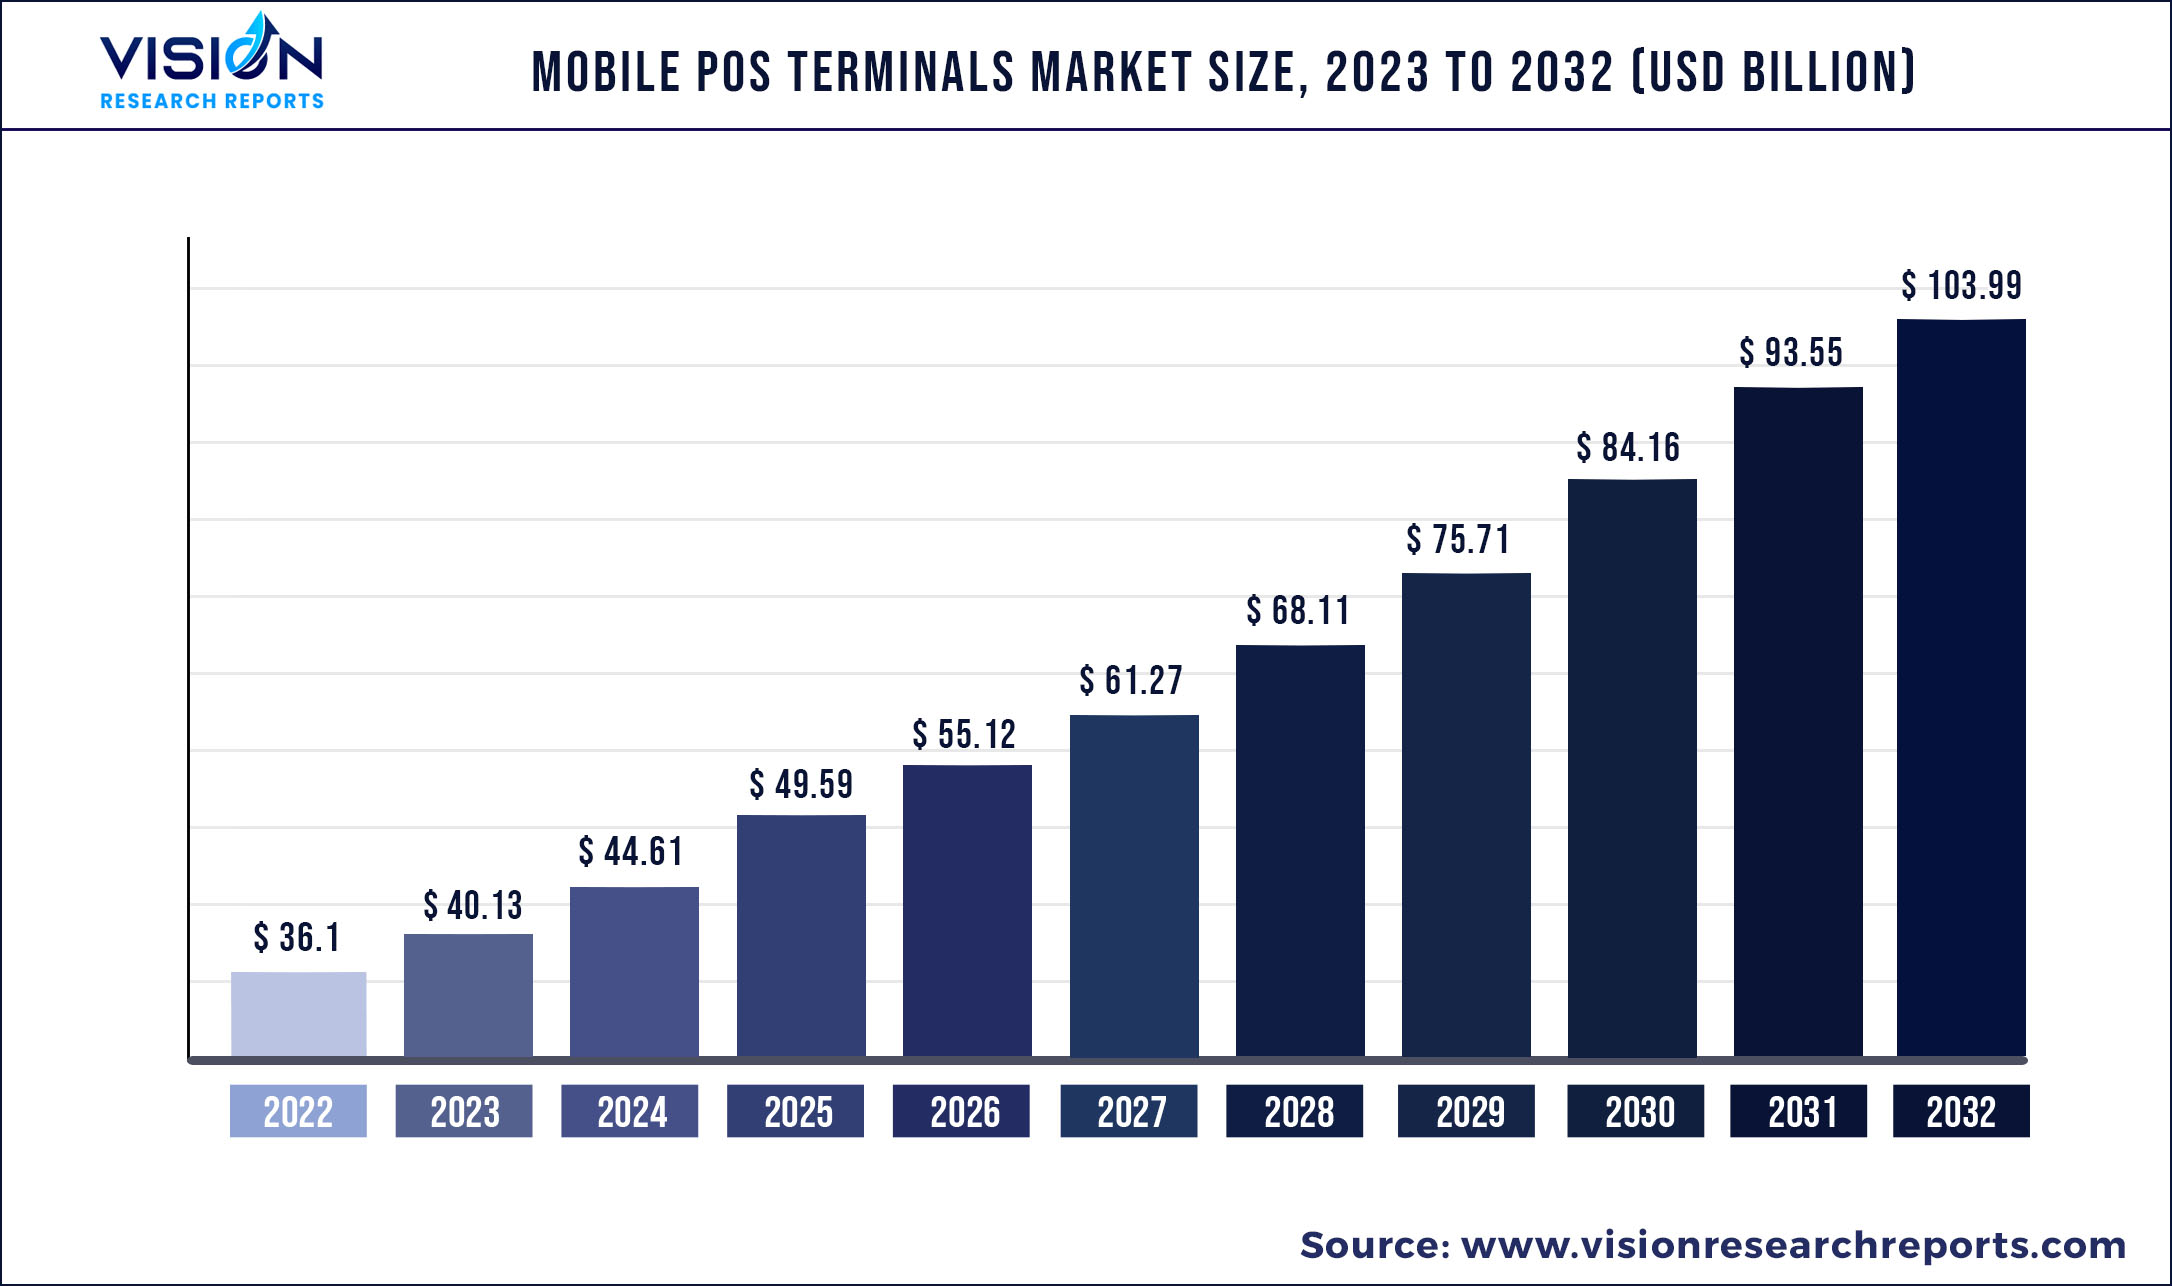 Mobile POS Terminals Market Size 2023 to 2032